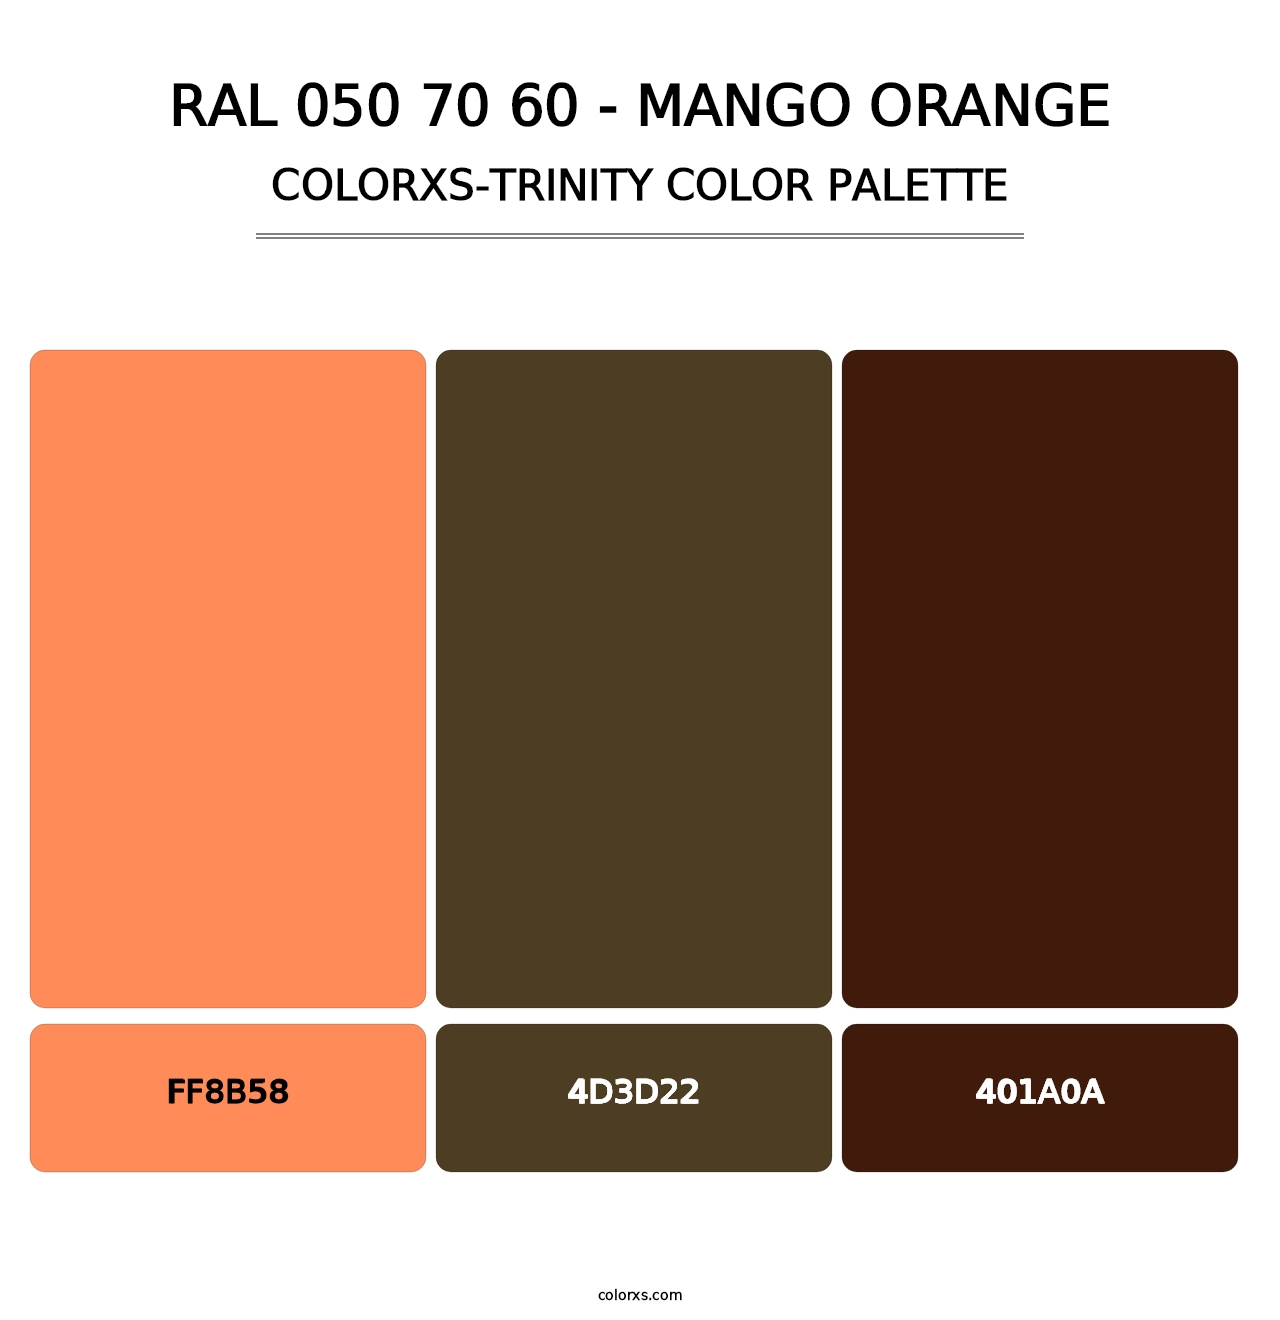 RAL 050 70 60 - Mango Orange - Colorxs Trinity Palette